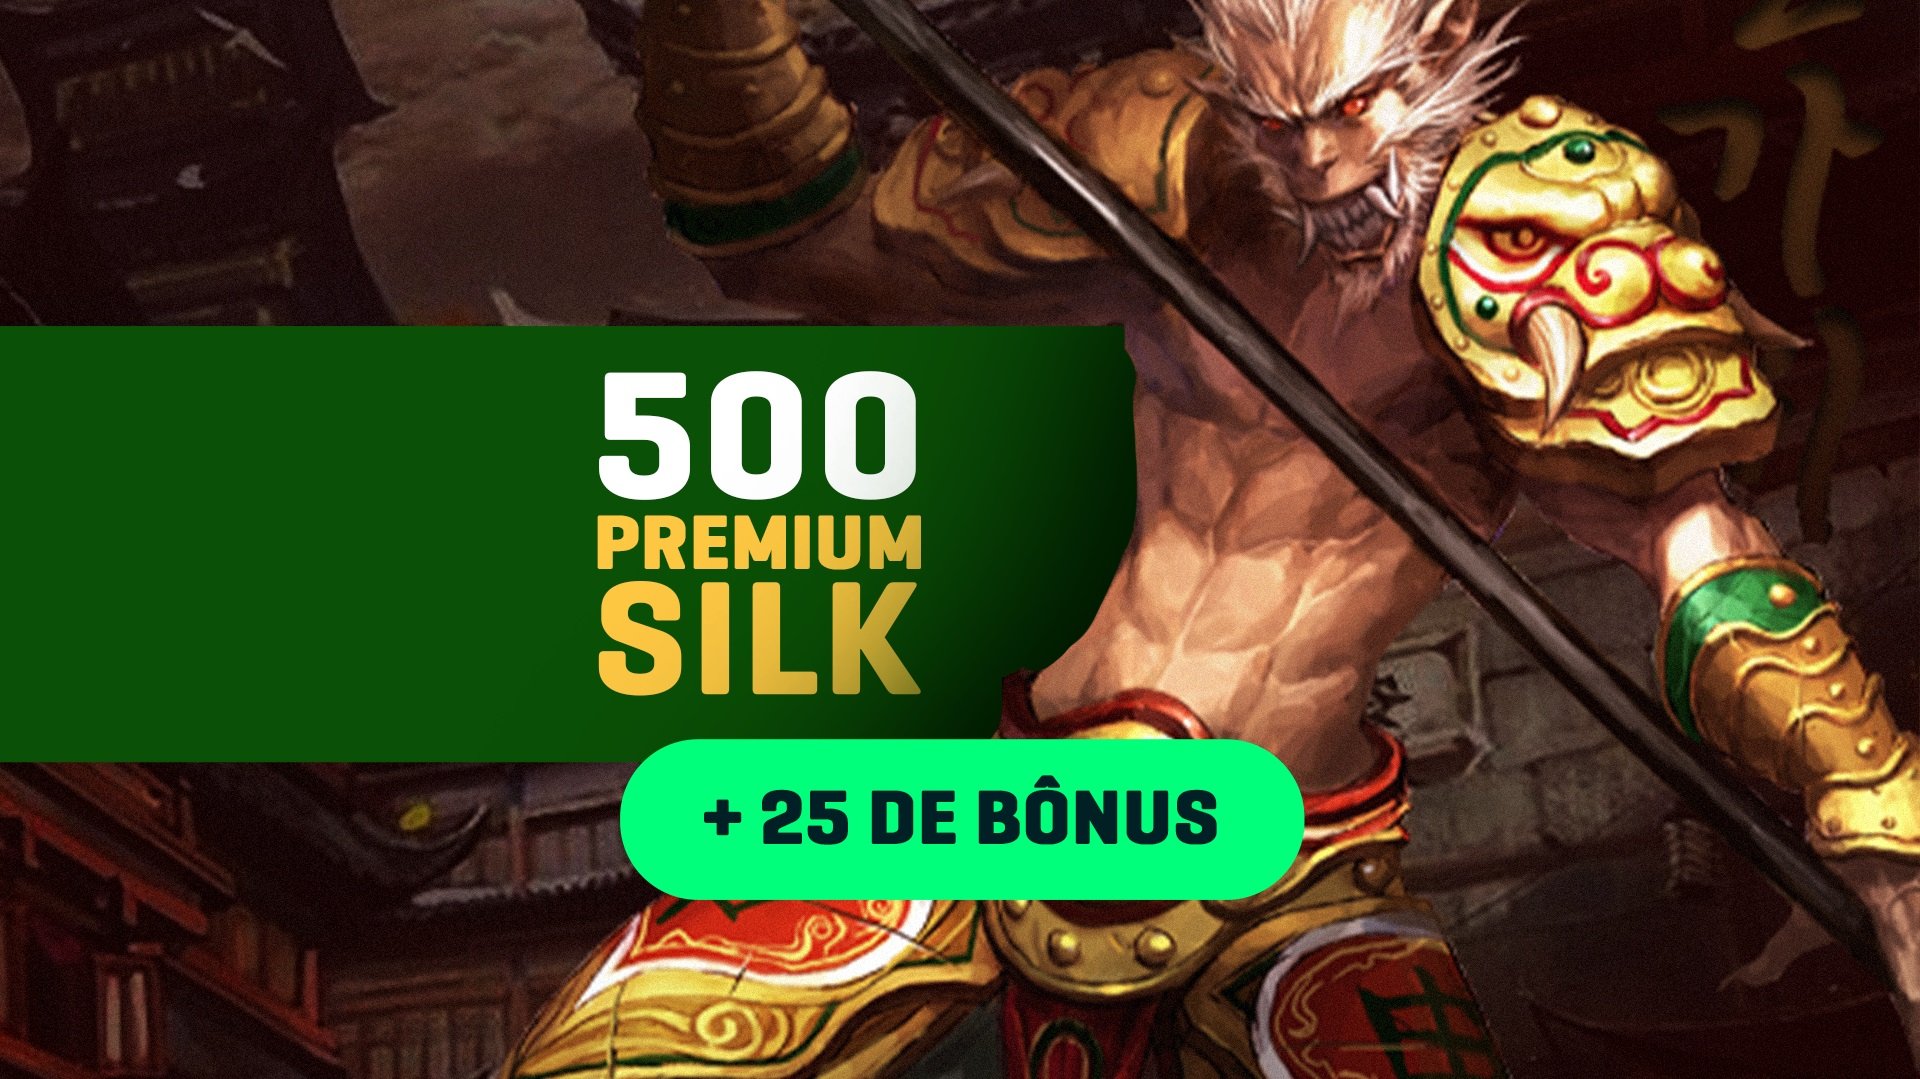 Silkroad – Pacote de 500 PREMIUM SILK + Bônus de 25 PREMIUM SILK